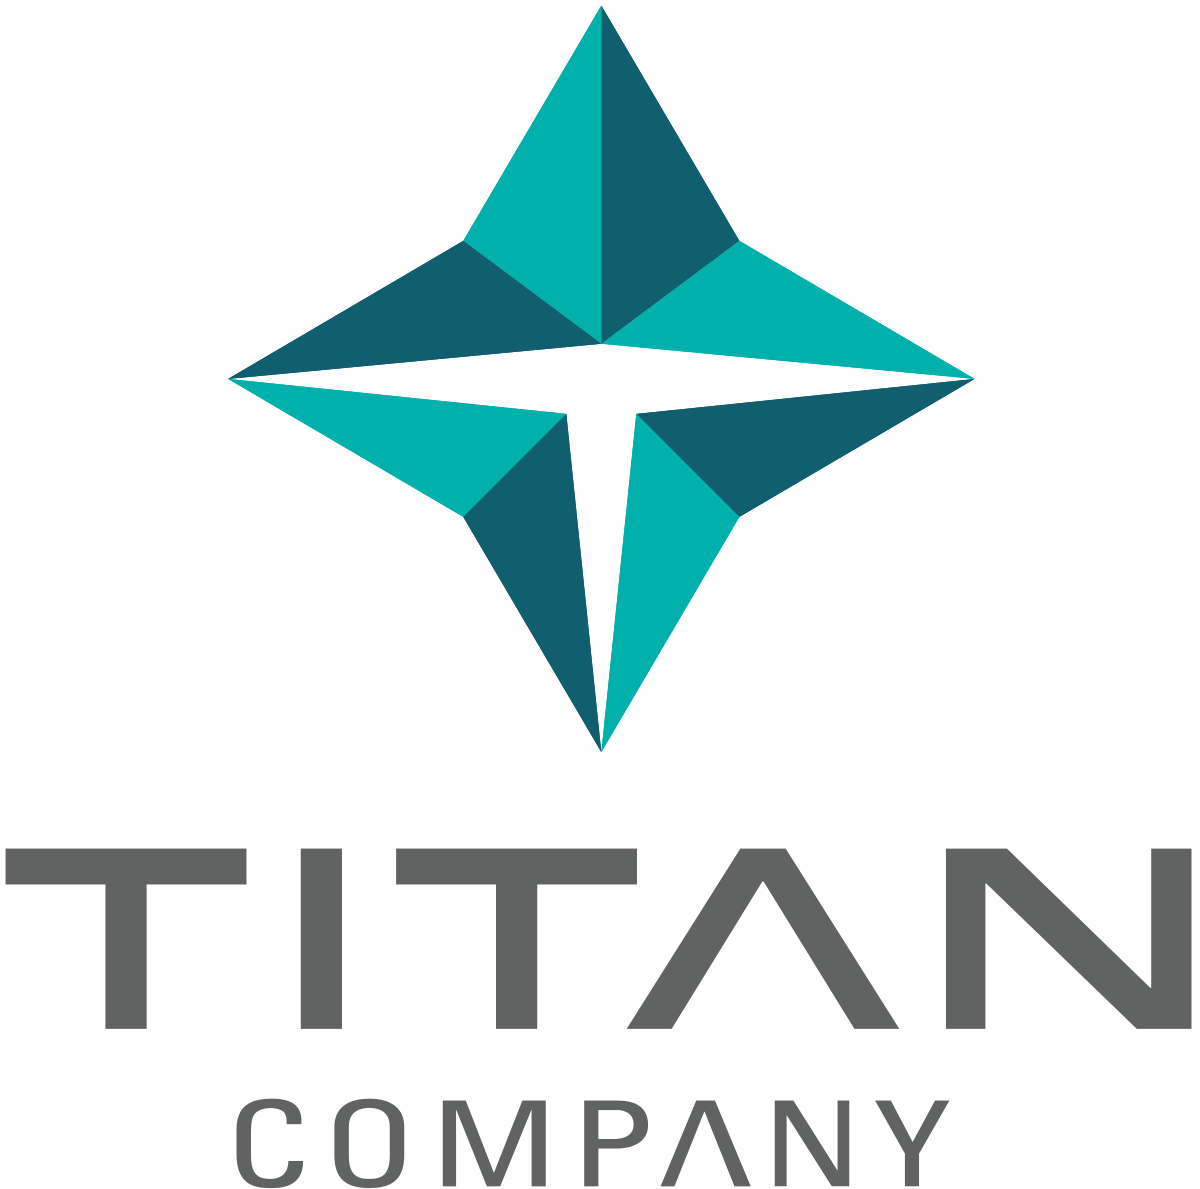 Titan Share Price News today | Titan Caralate News Today